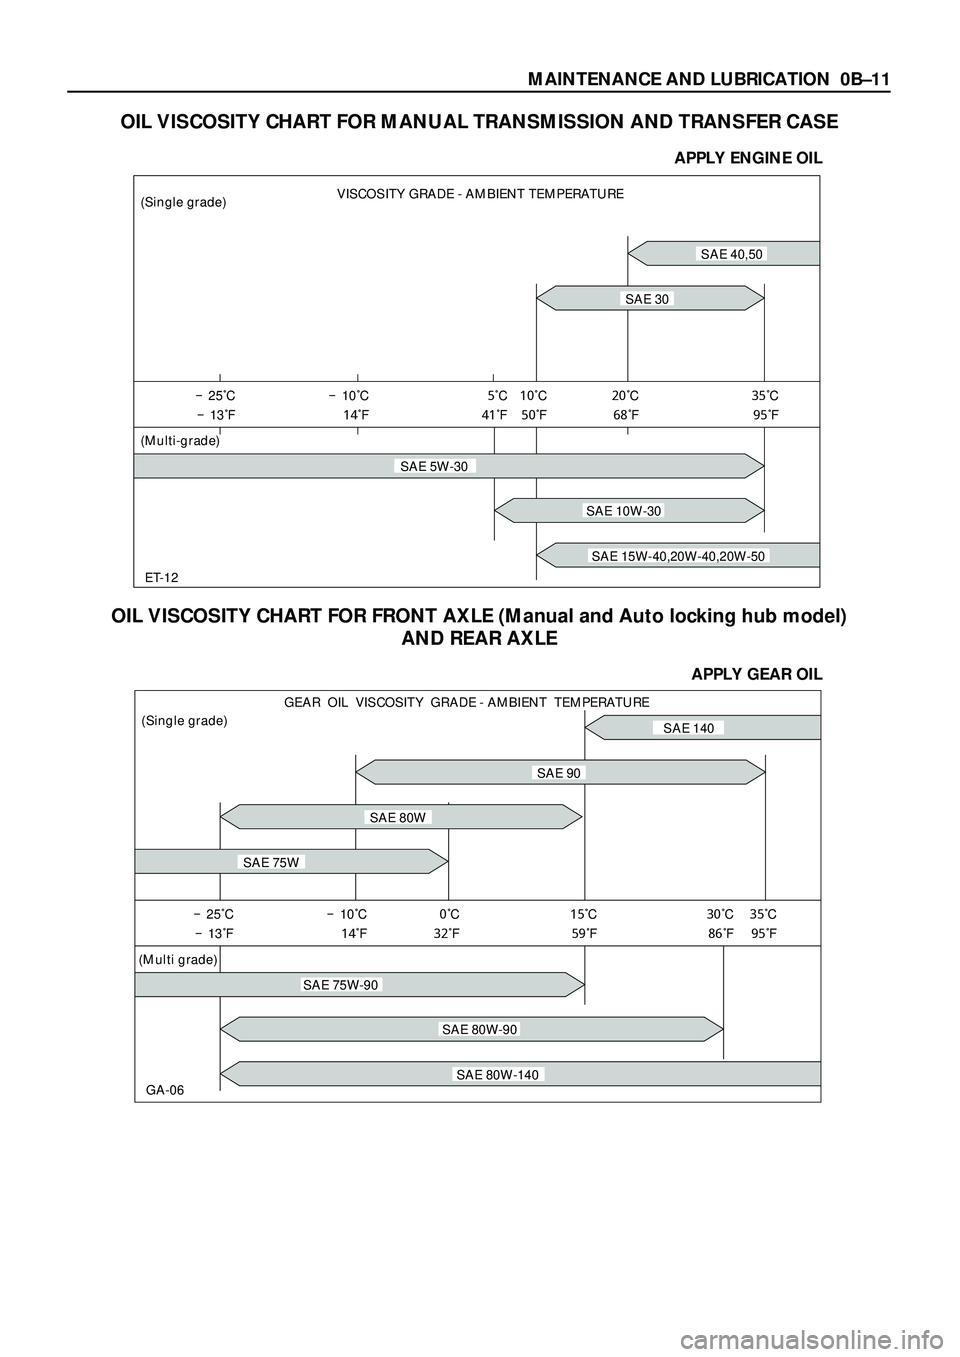 ISUZU TROOPER 1998  Service Repair Manual MAINTENANCE AND LUBRICATION 0BÐ11
OIL VISCOSITY CHART FOR MANUAL TRANSMISSION AND TRANSFER CASE
APPLY ENGINE OIL 
SAE 5W-30
SAE 15W-40,20W-40,20W-50
SAE 10W-30
SAE 40,50
ET-12 (Multi-grade) (Single g